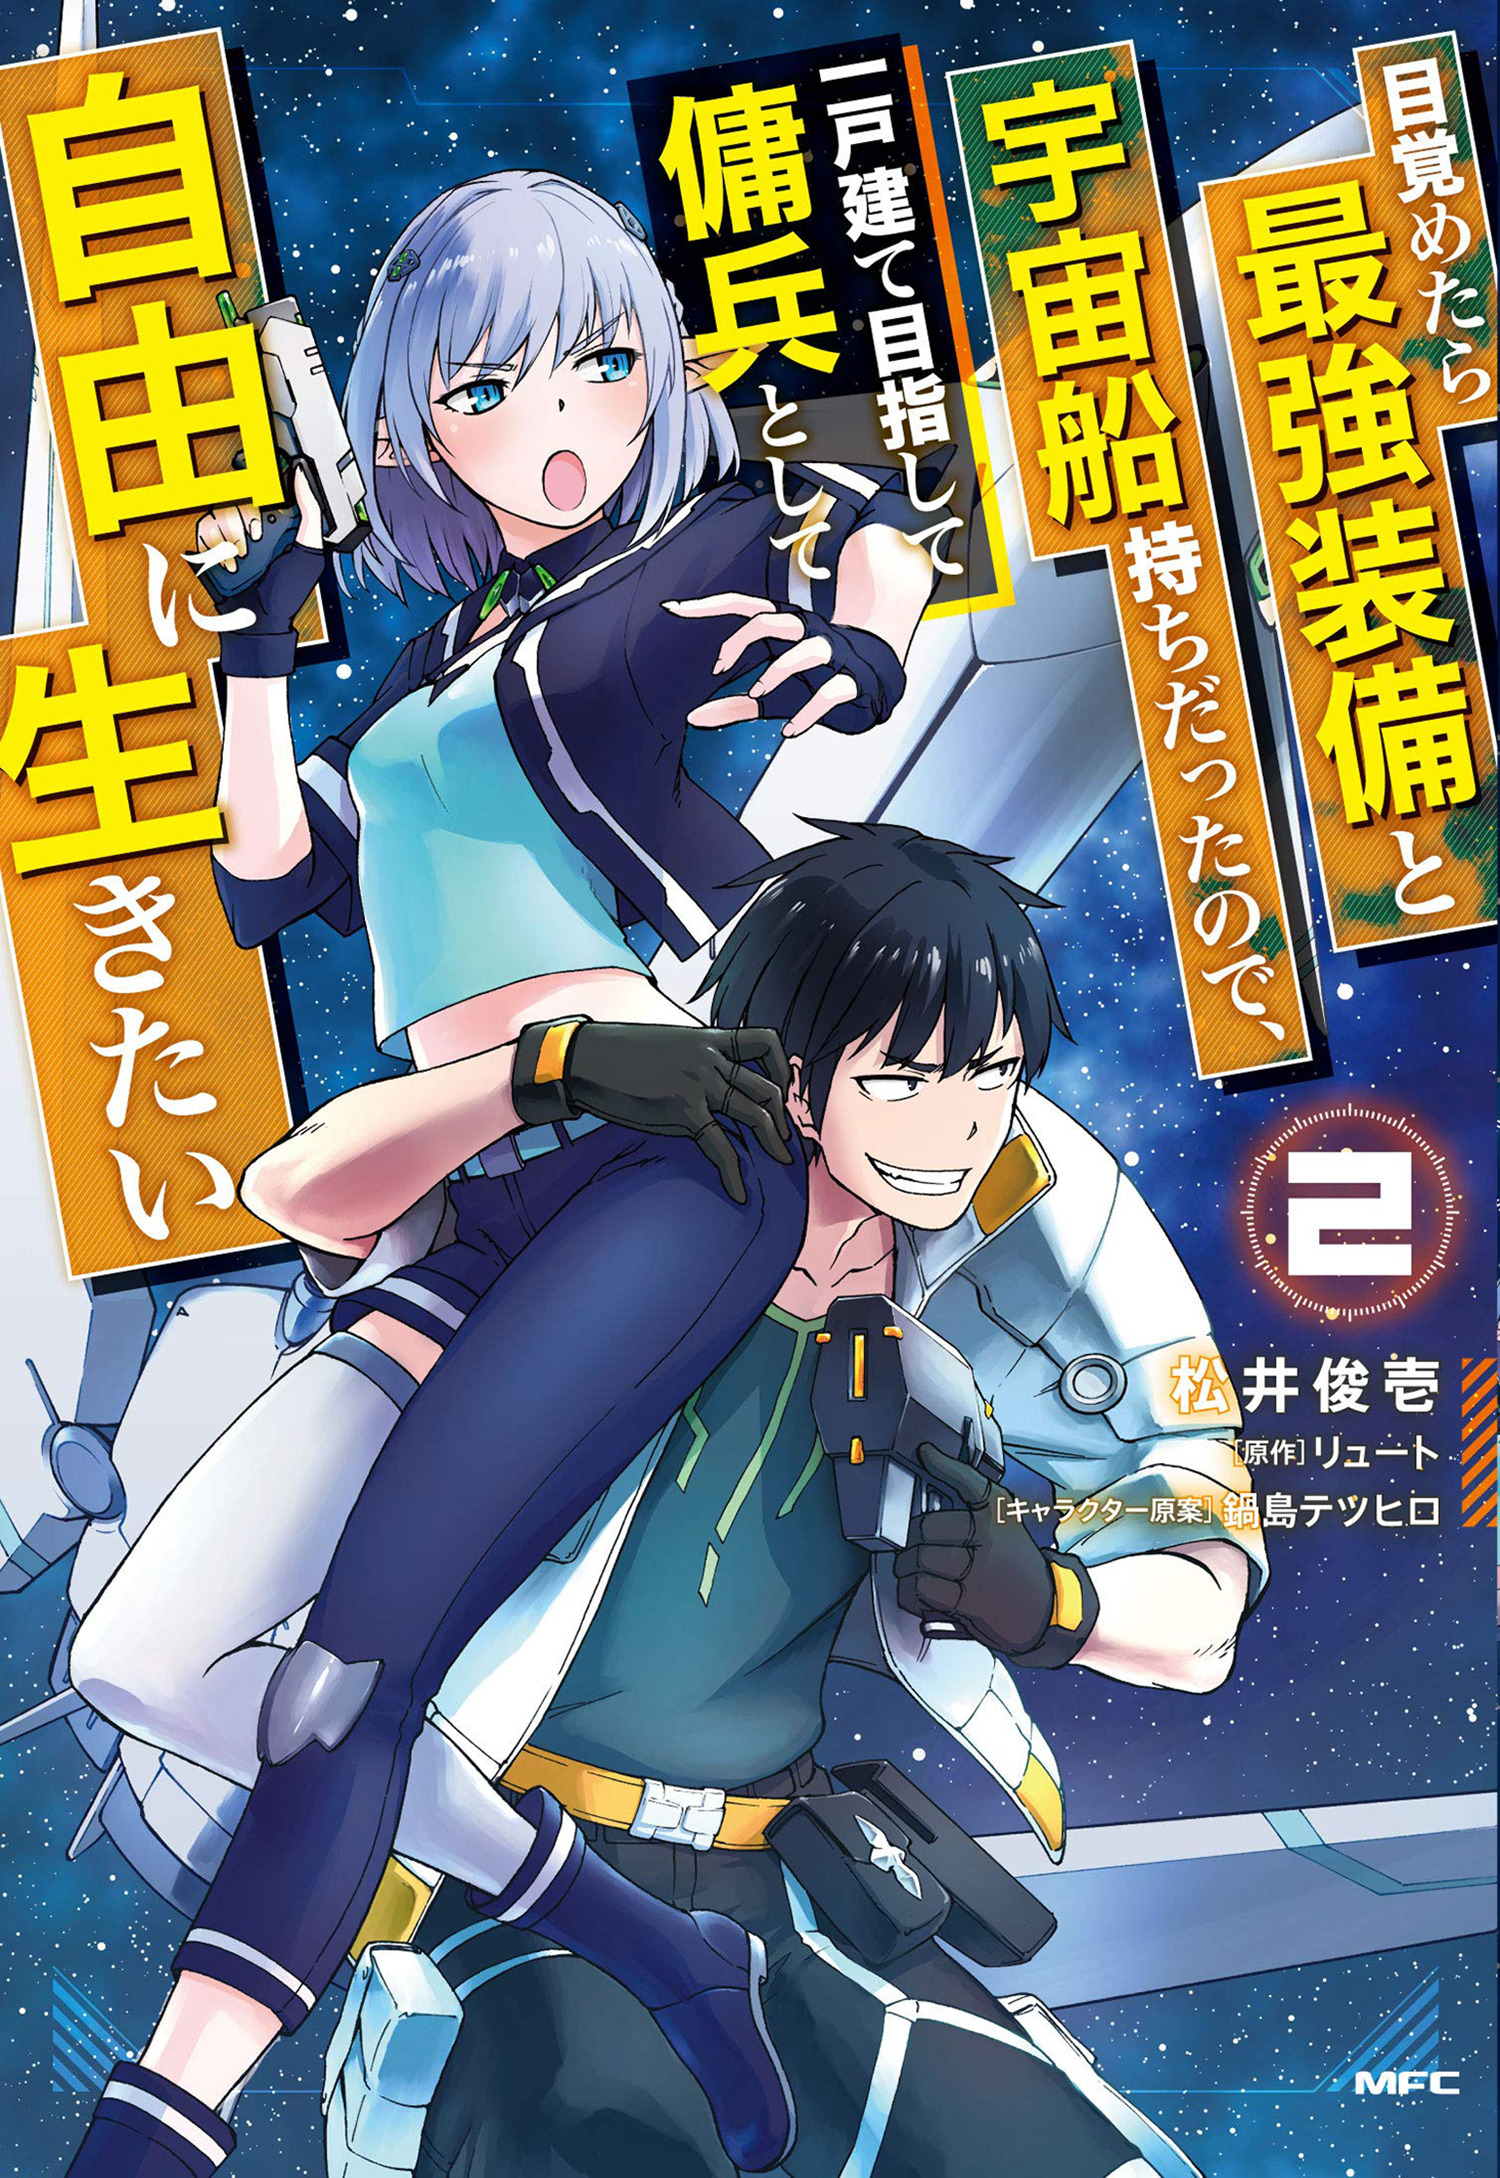 Reborn as a Space Mercenary: I Woke Up Piloting the Strongest Starship! Manga Volume 2